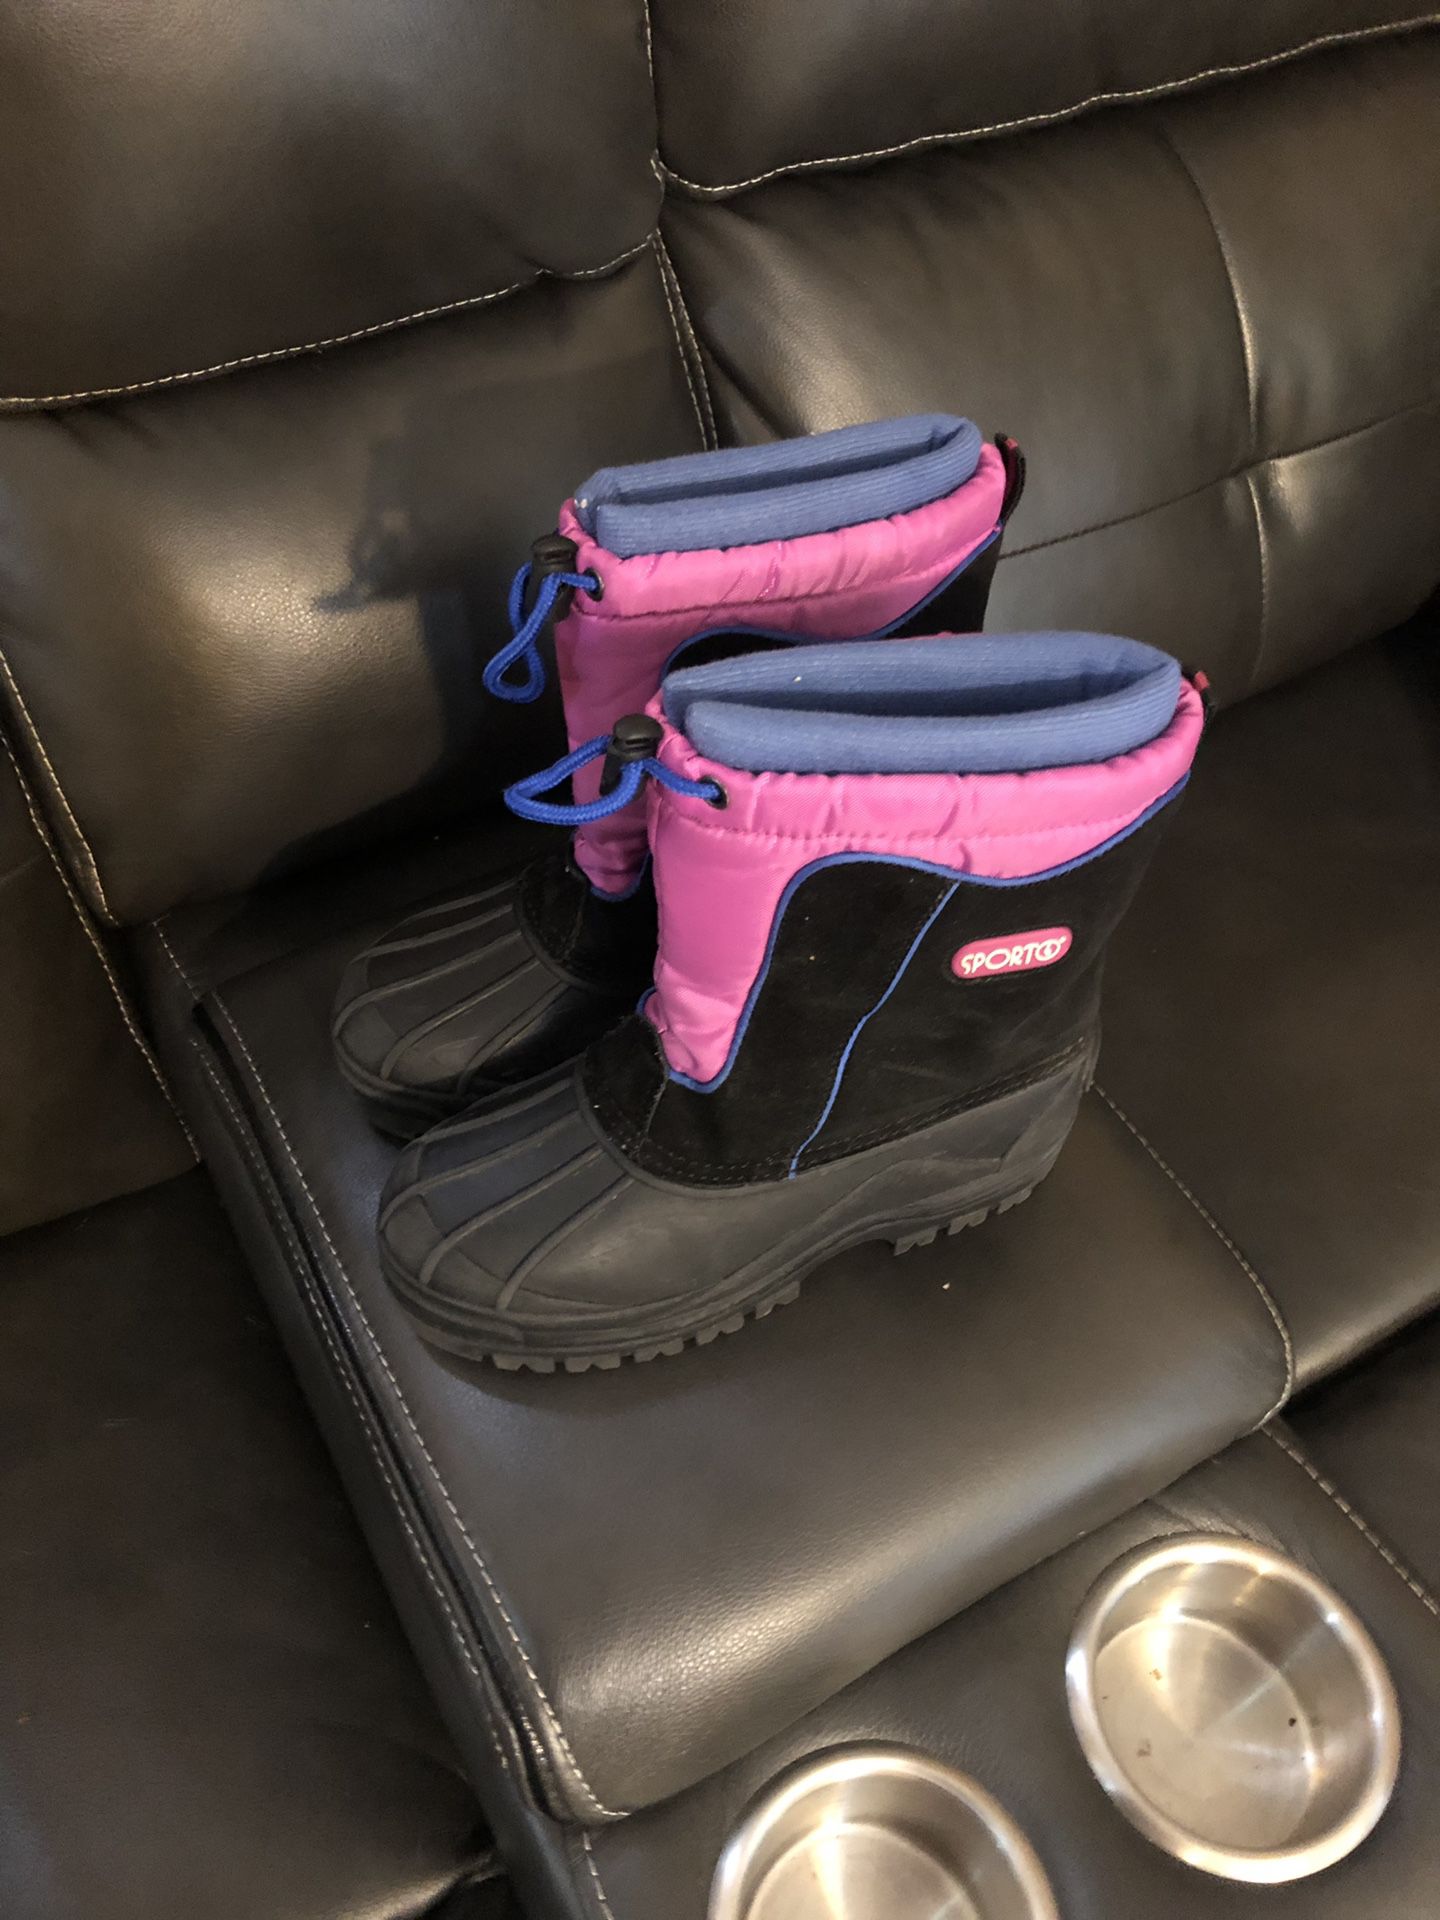 Snow ⛄️ boots zise 3 kids